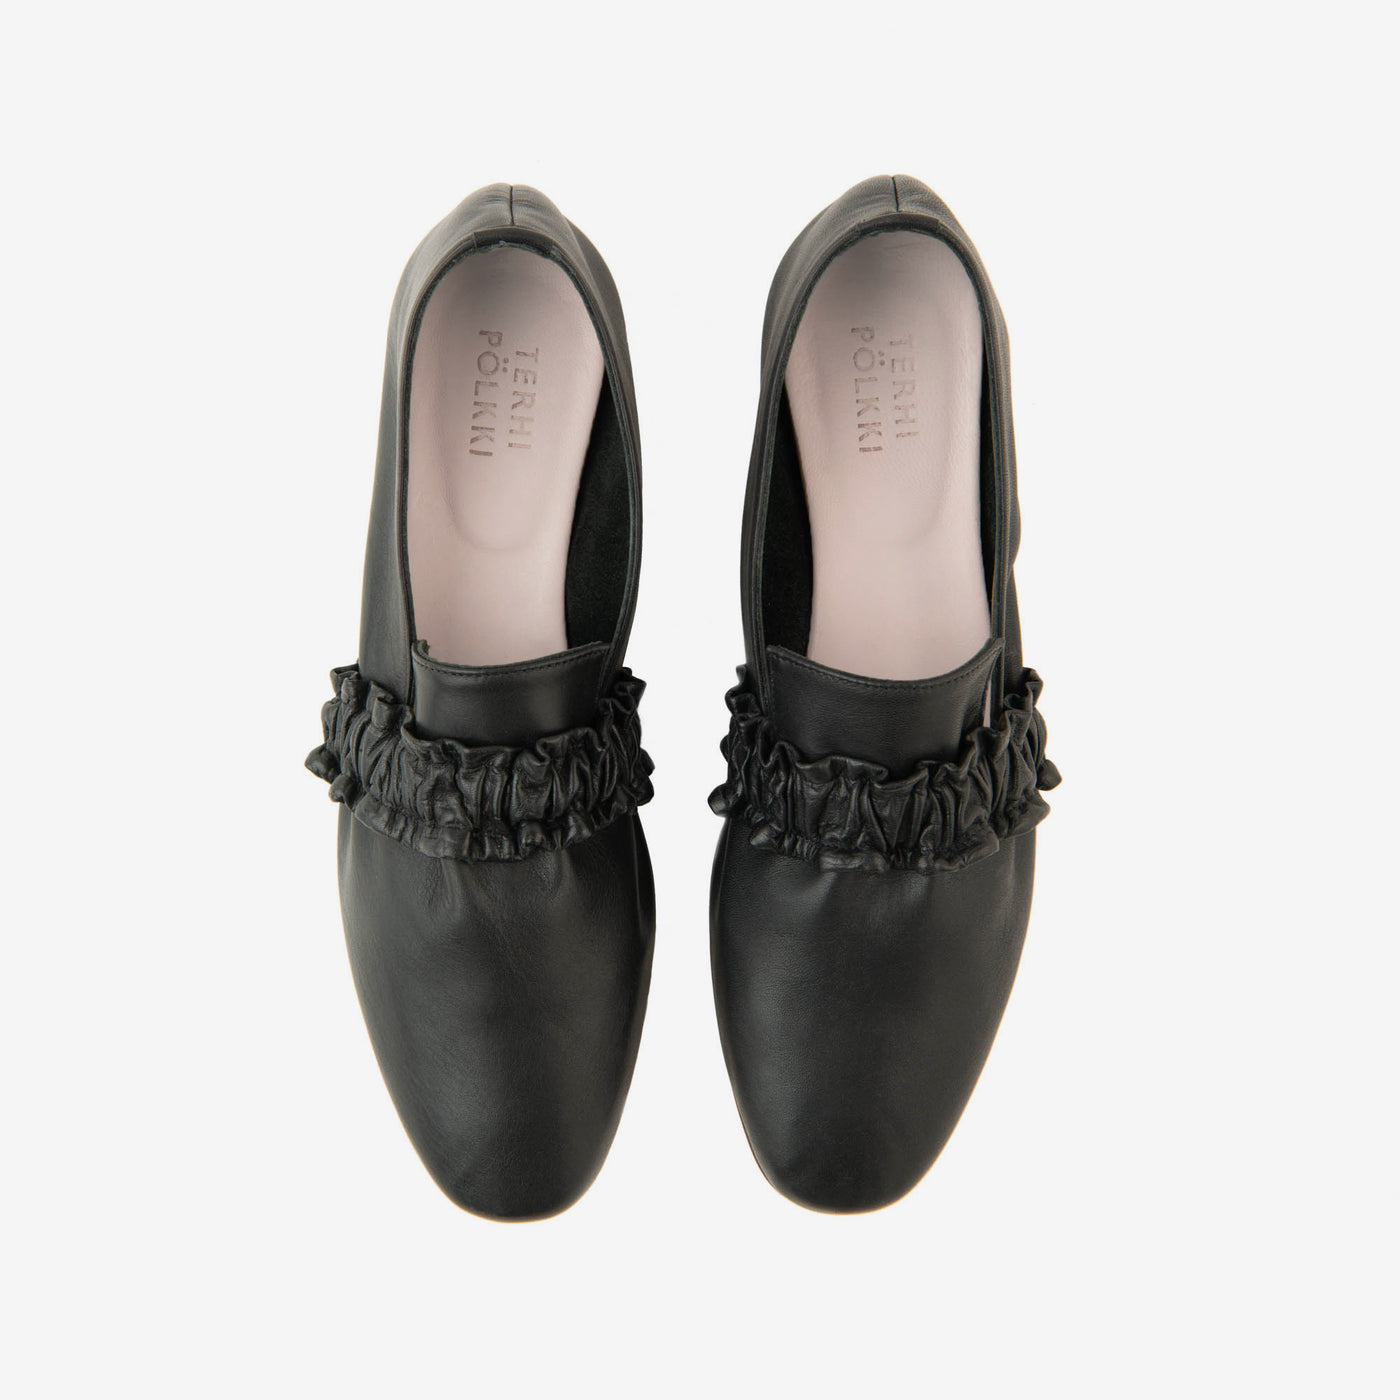 Victoria loafer all black